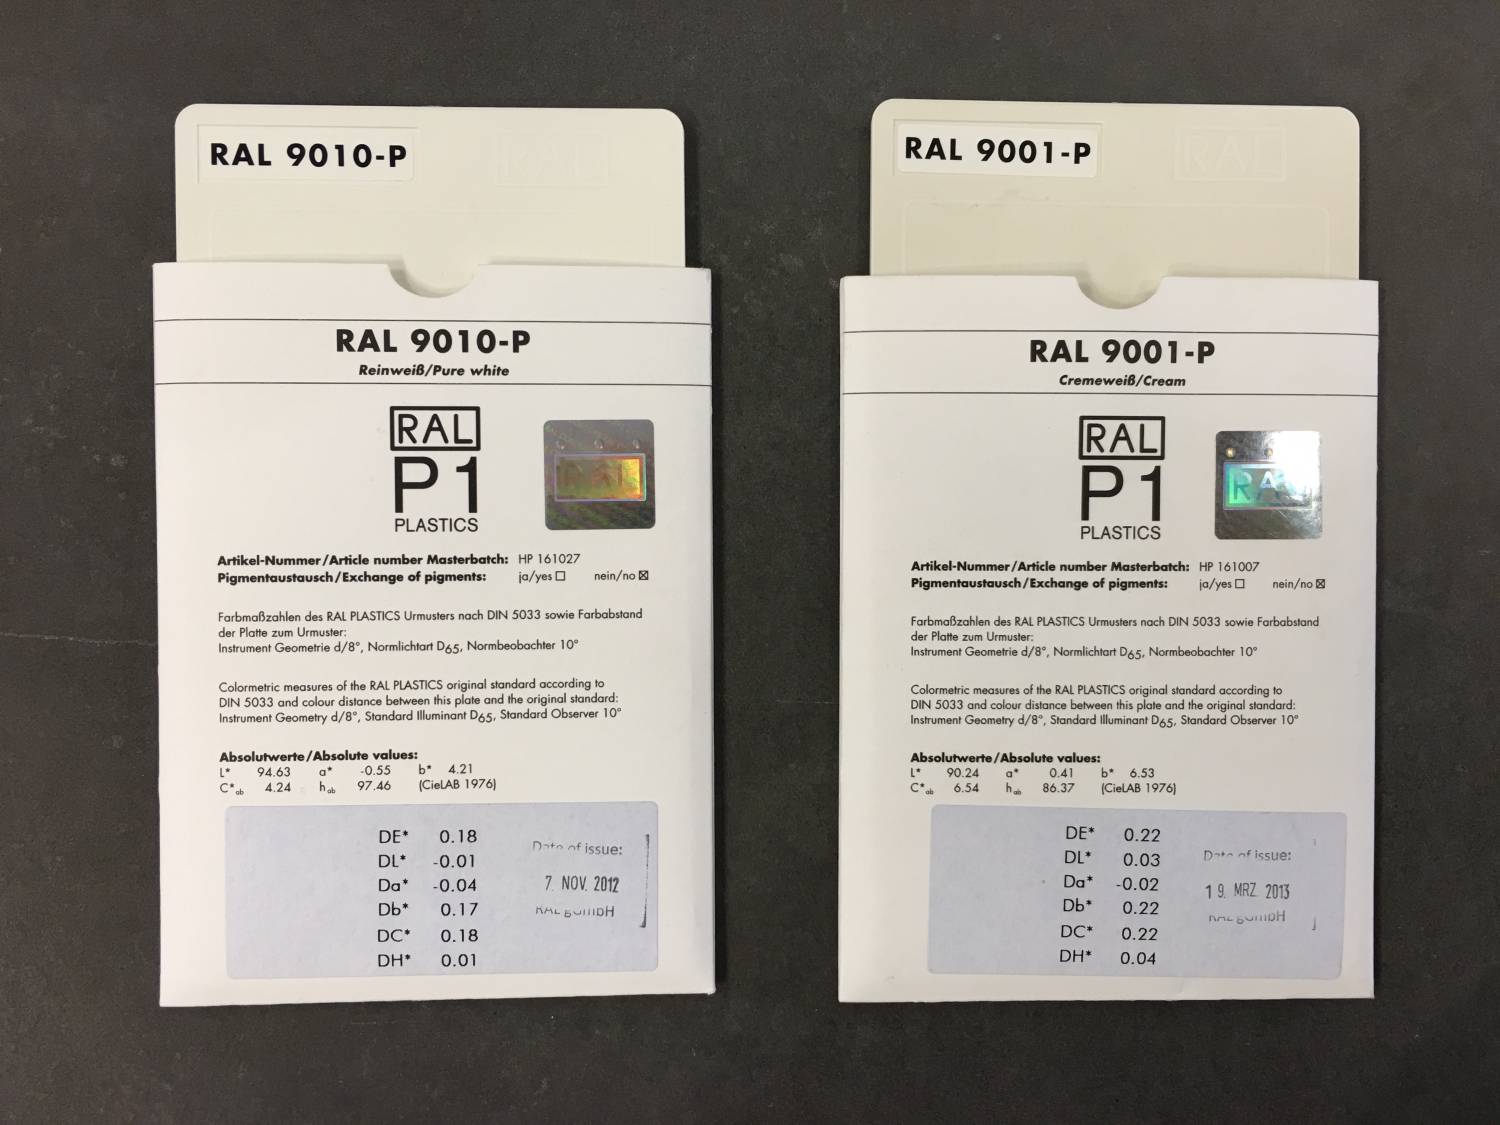 RAL 9001 vs RAL 9010